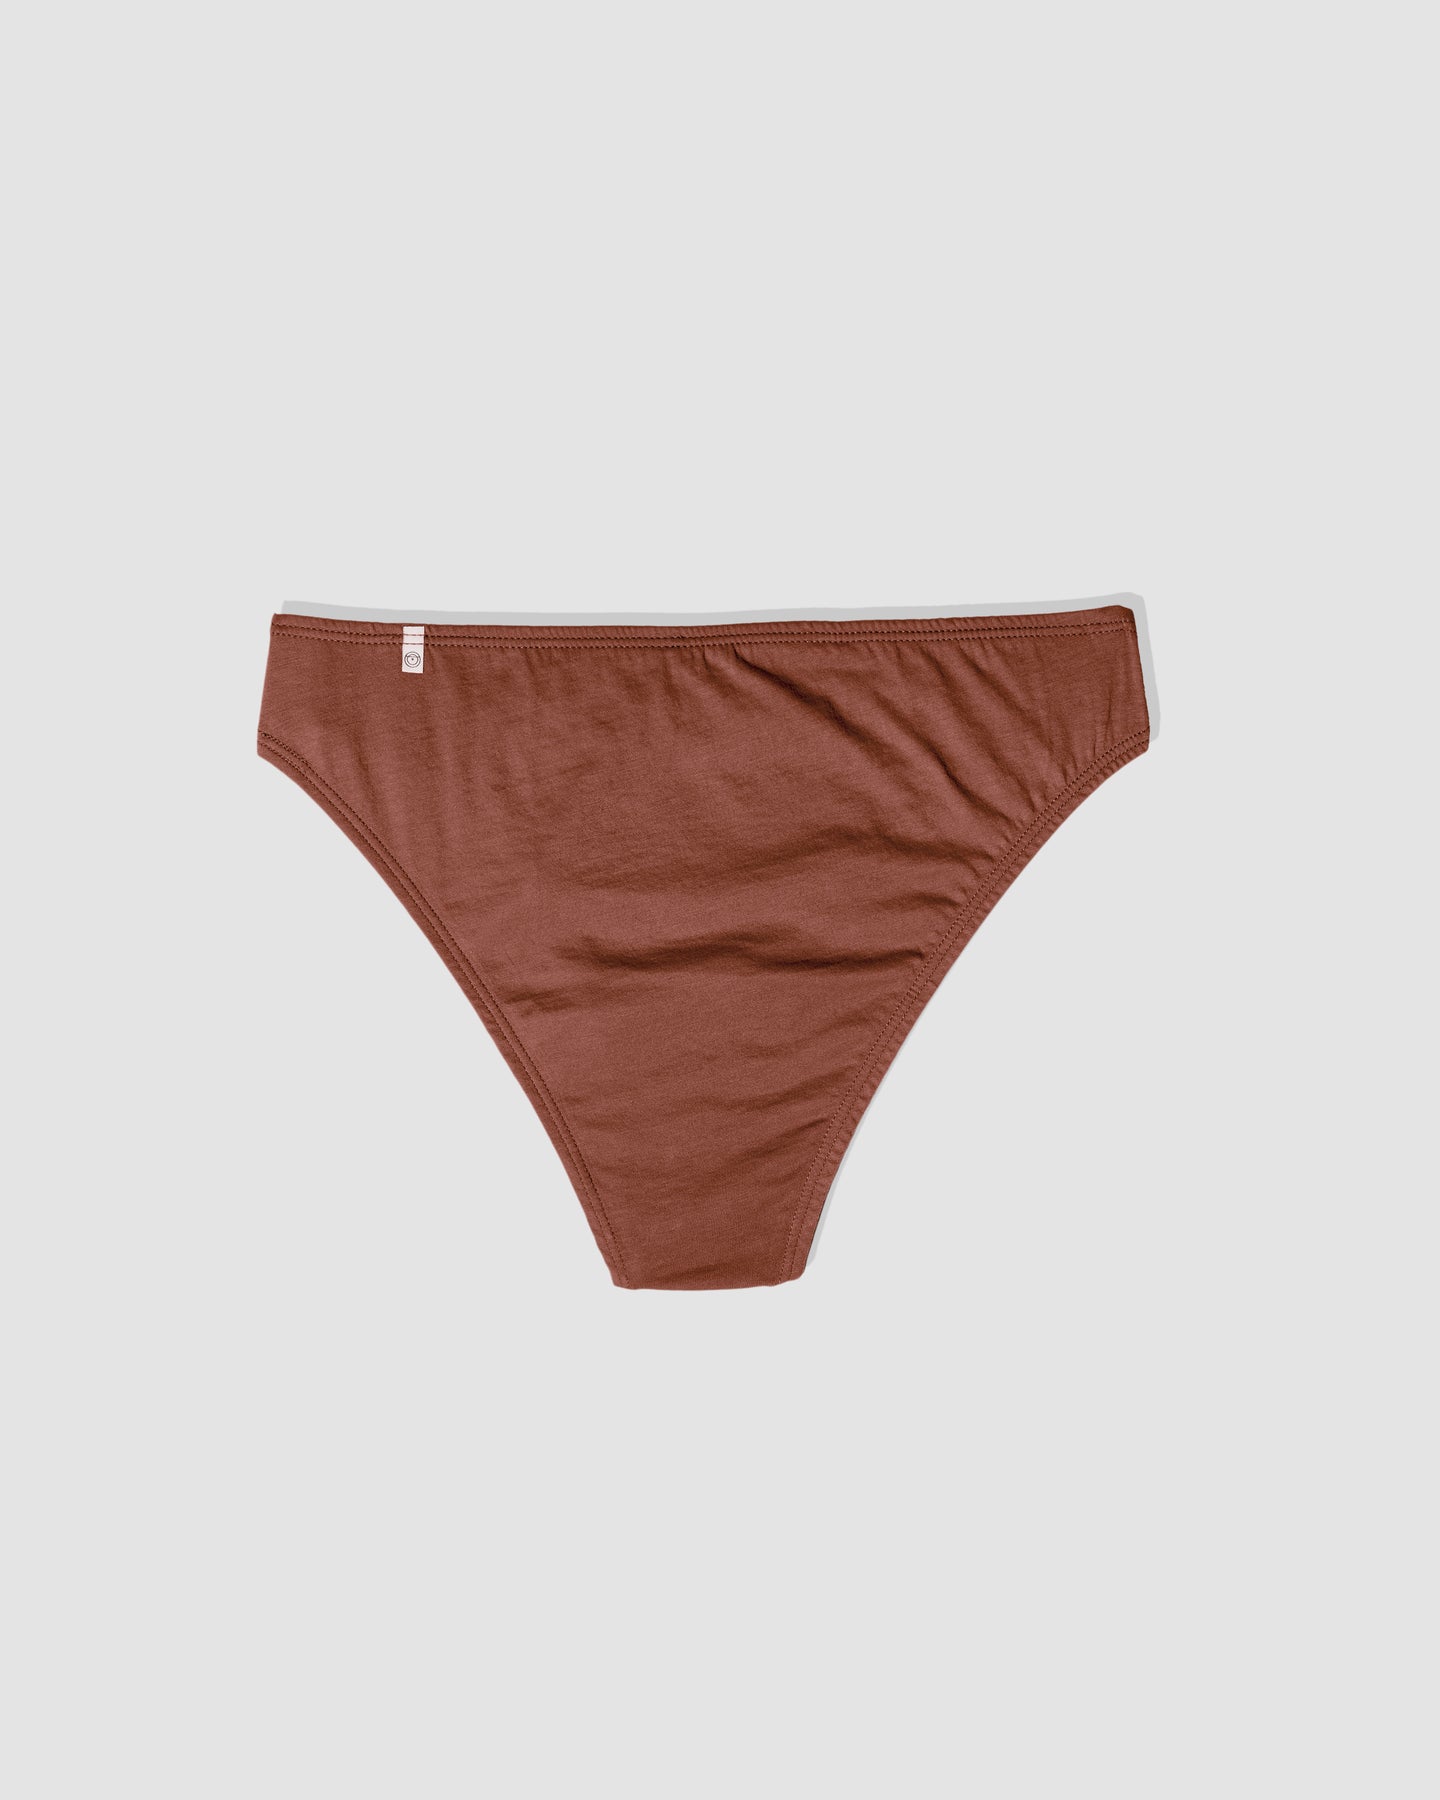 shop men - moi-basics - finest ethically made underwear